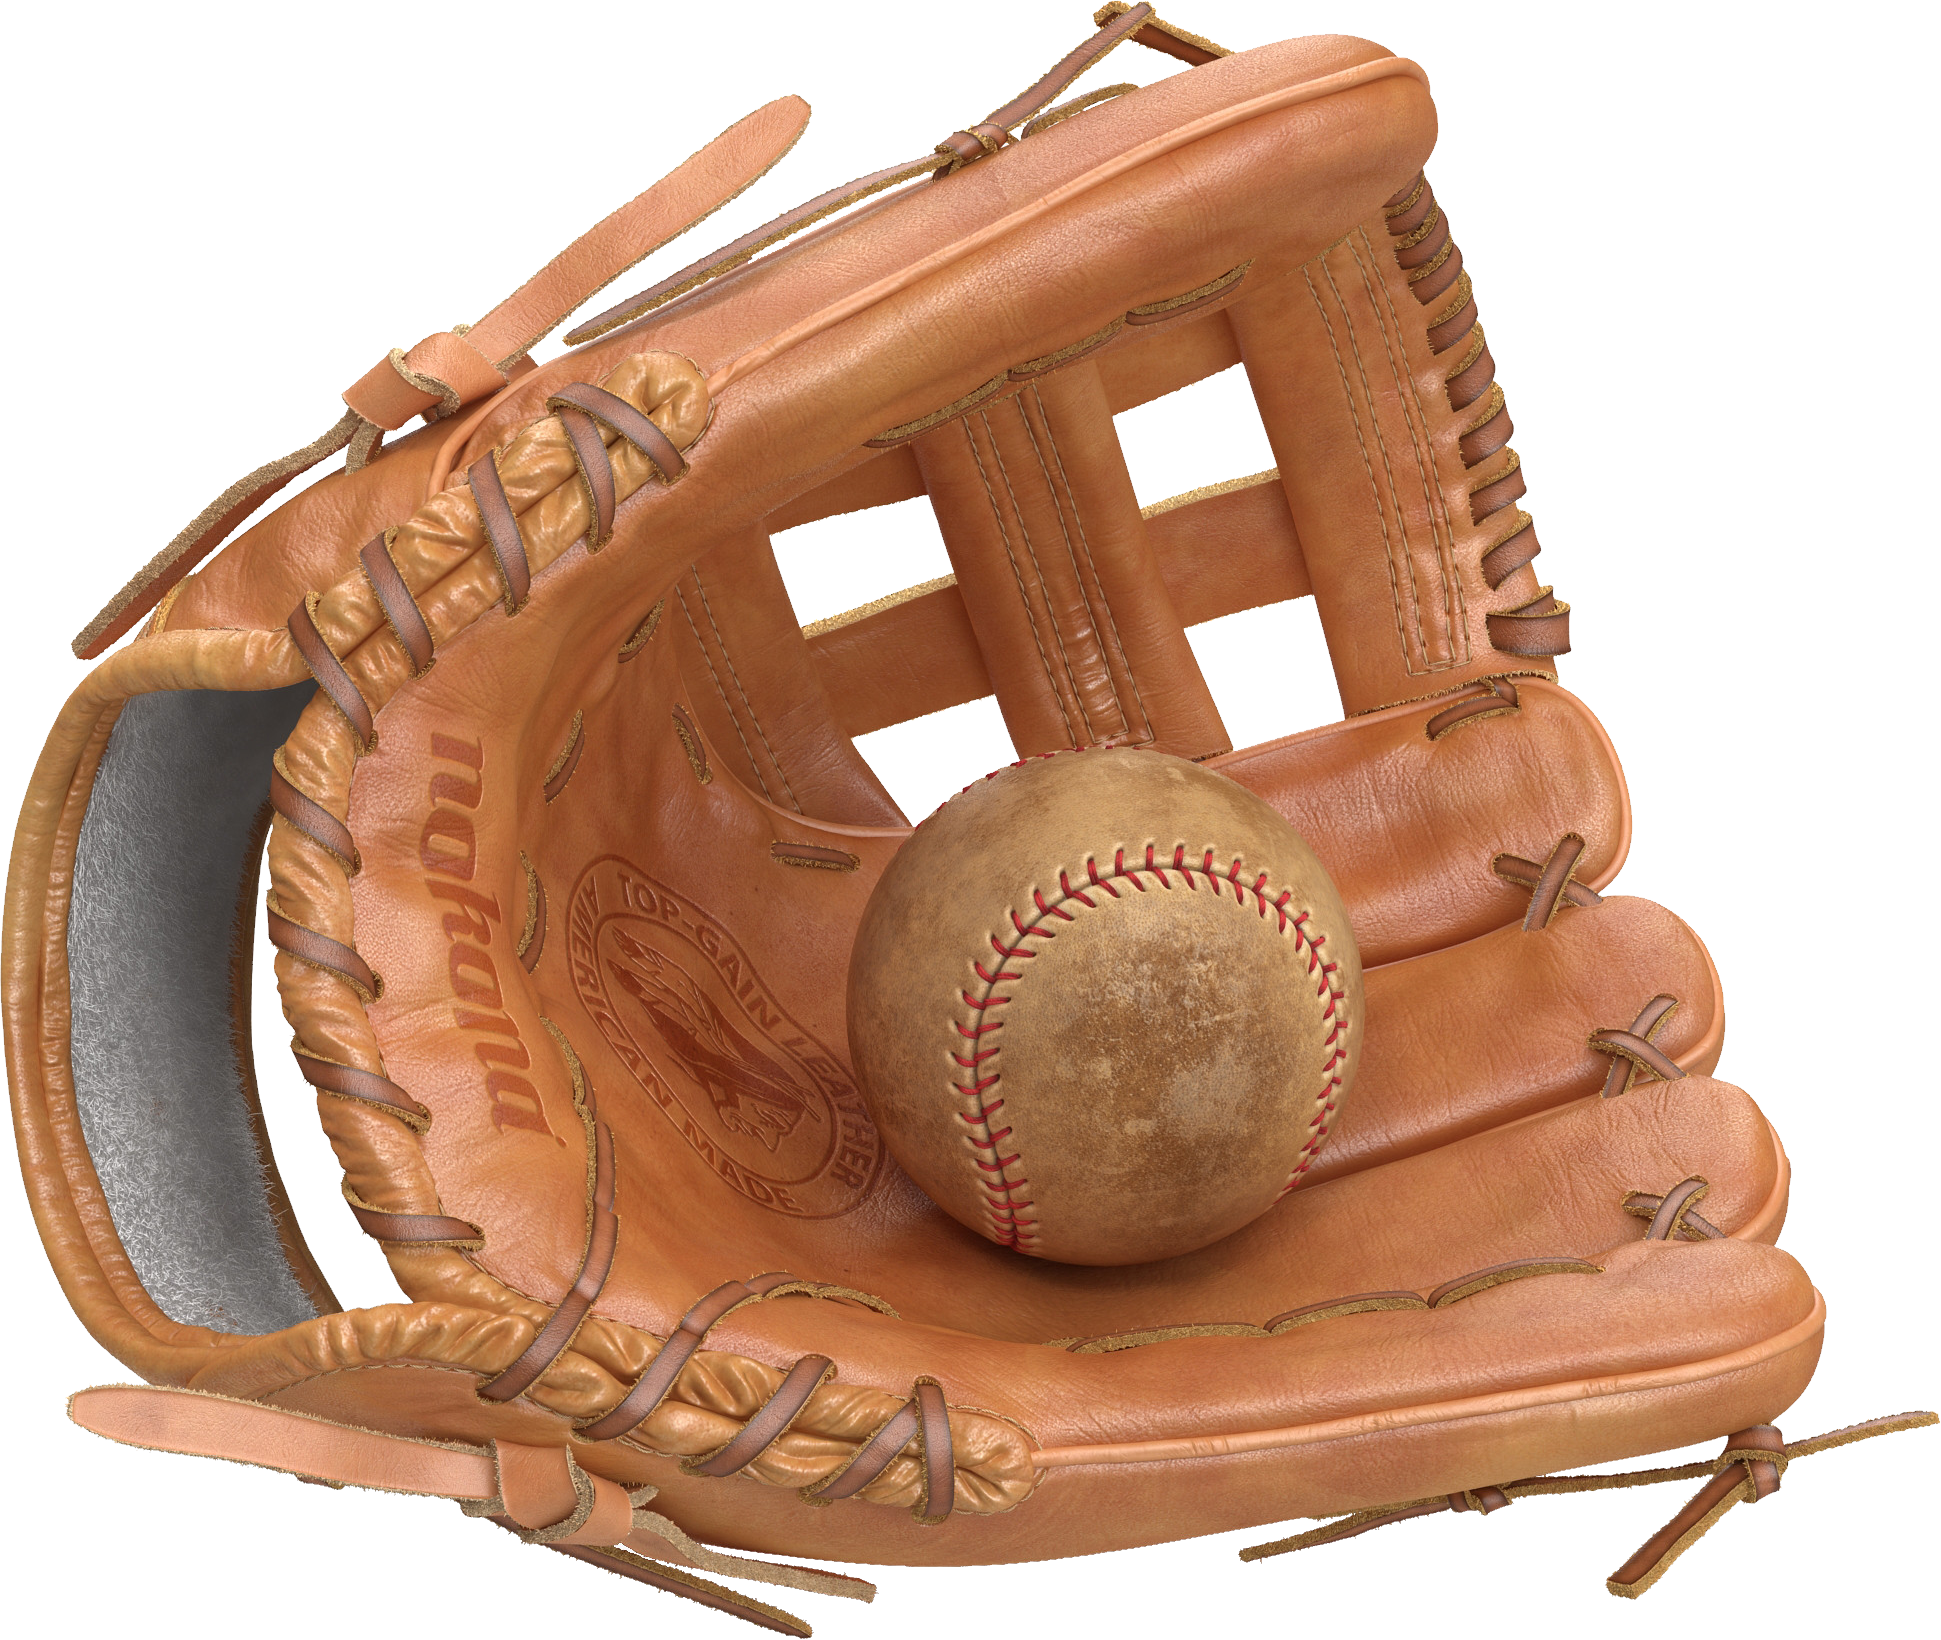 Baseball Gloves Png Image - Baseball (1941x1640), Png Download